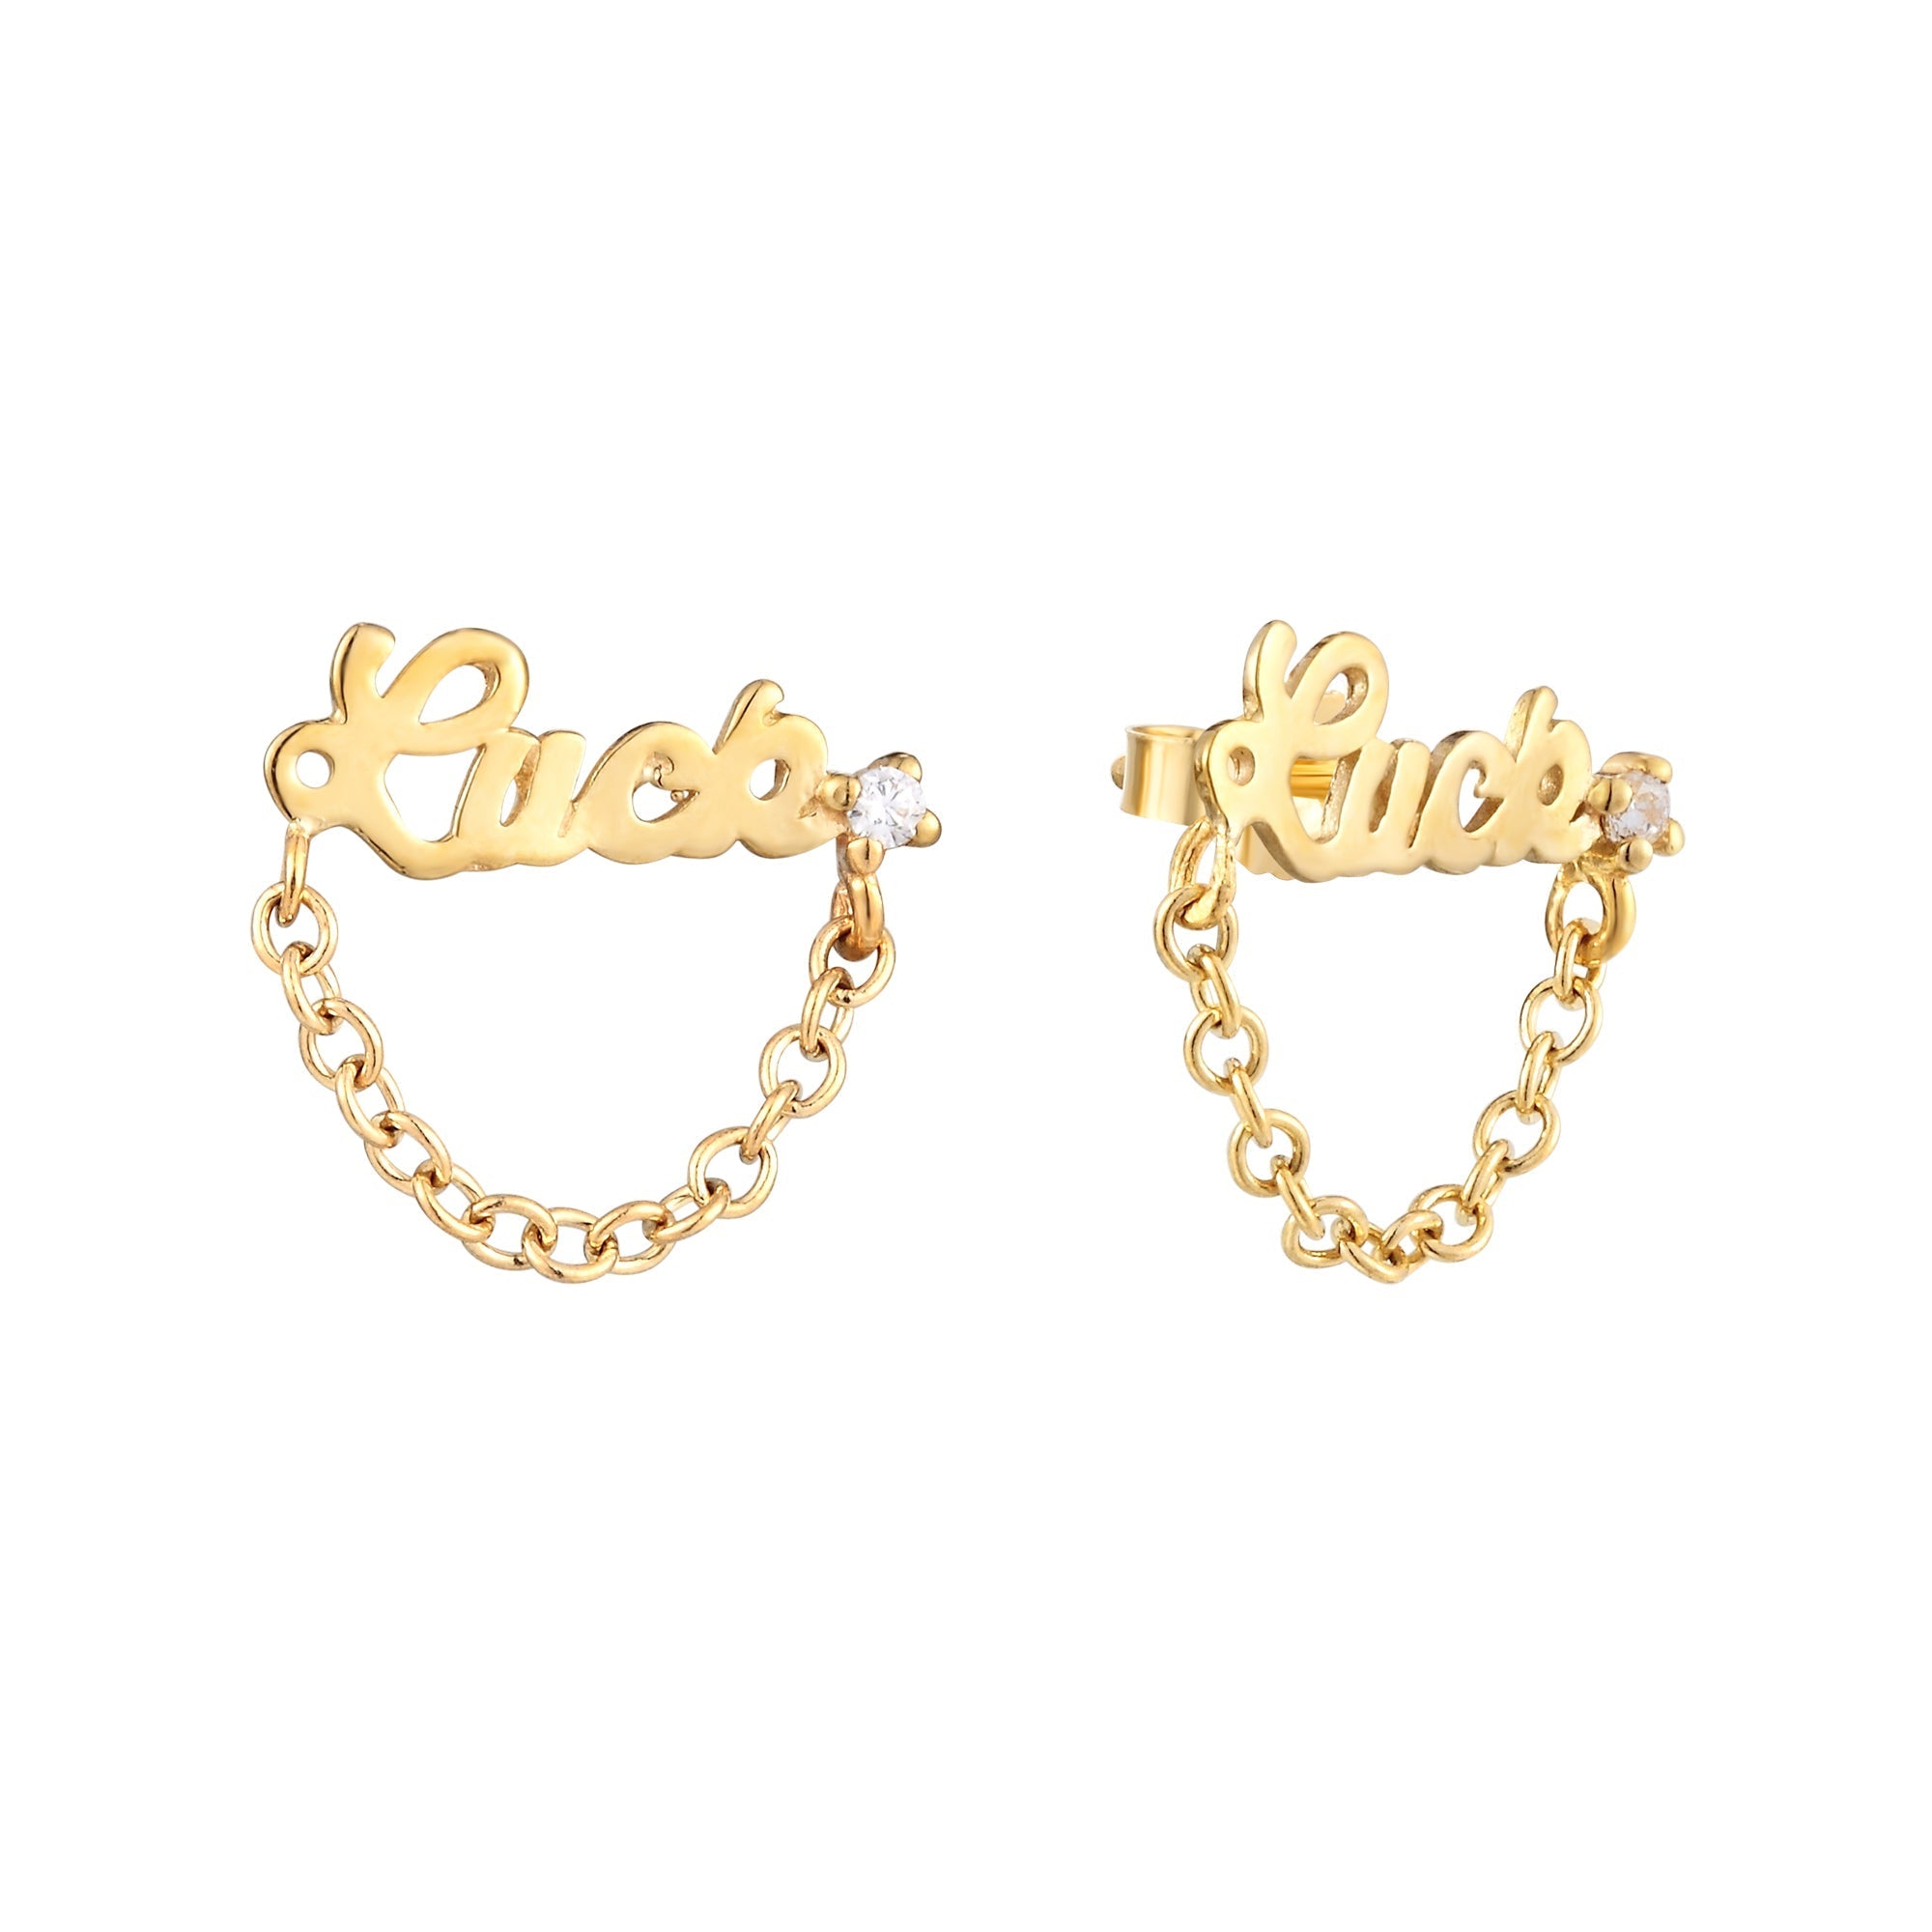 9ct gold word earrings - seolgold